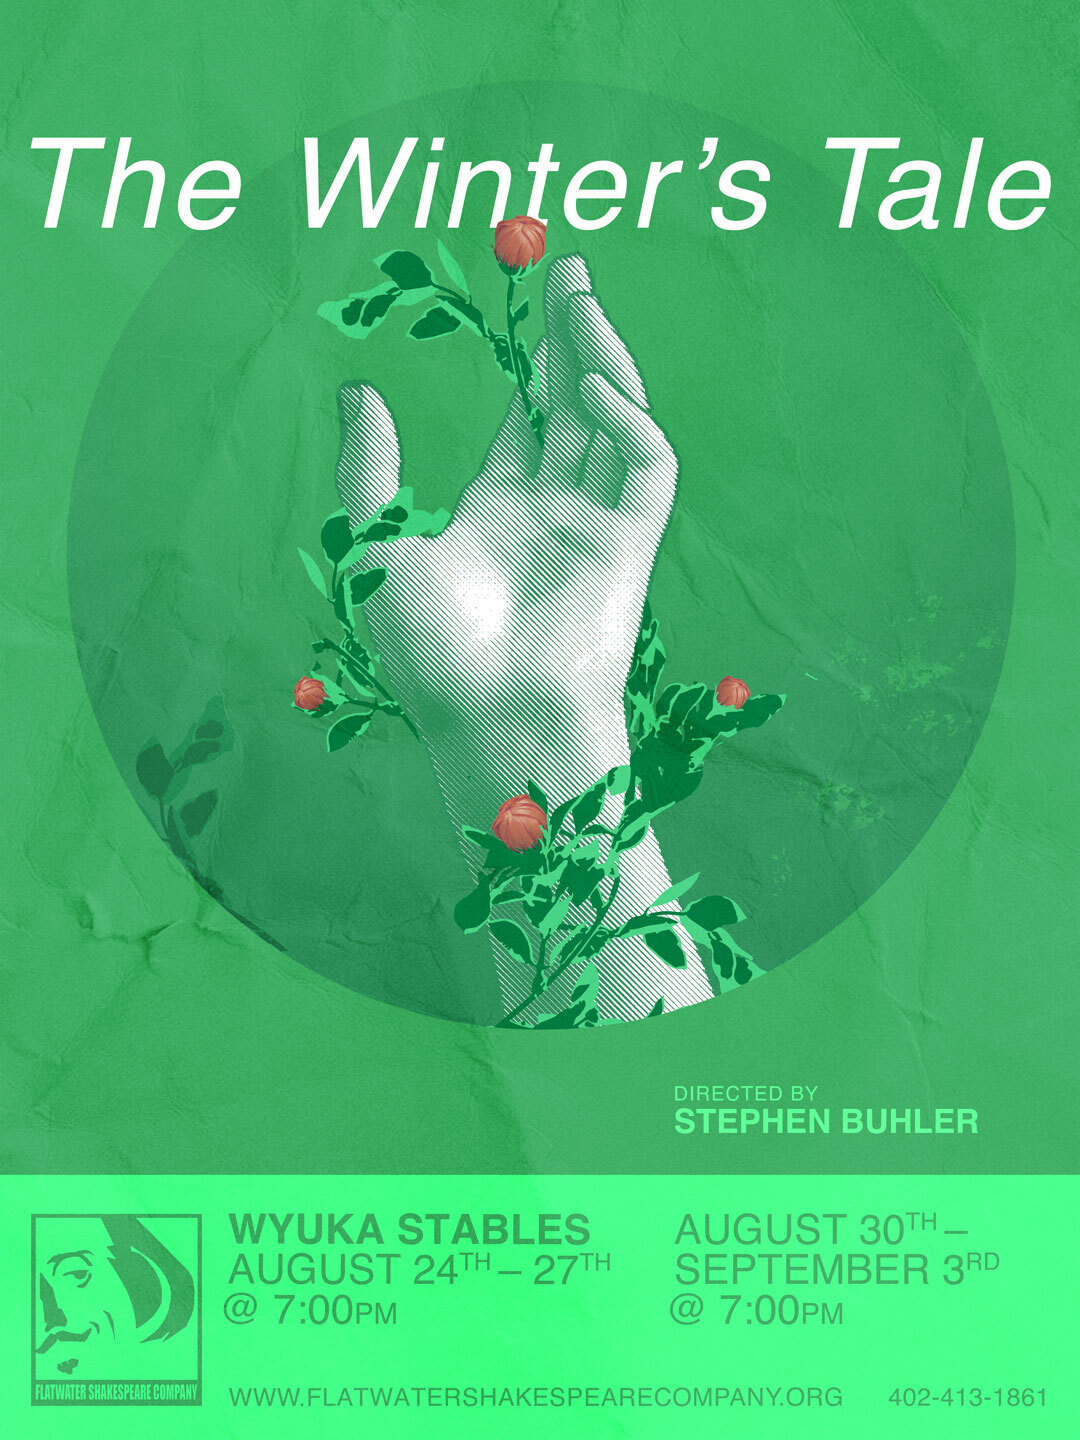 9/3 SEN - SENIOR (65+): Sun. September 3, 2023 | 7:00 p.m. - 10:00 p.m. CST | Wyuka Stables (The Winter's Tale)